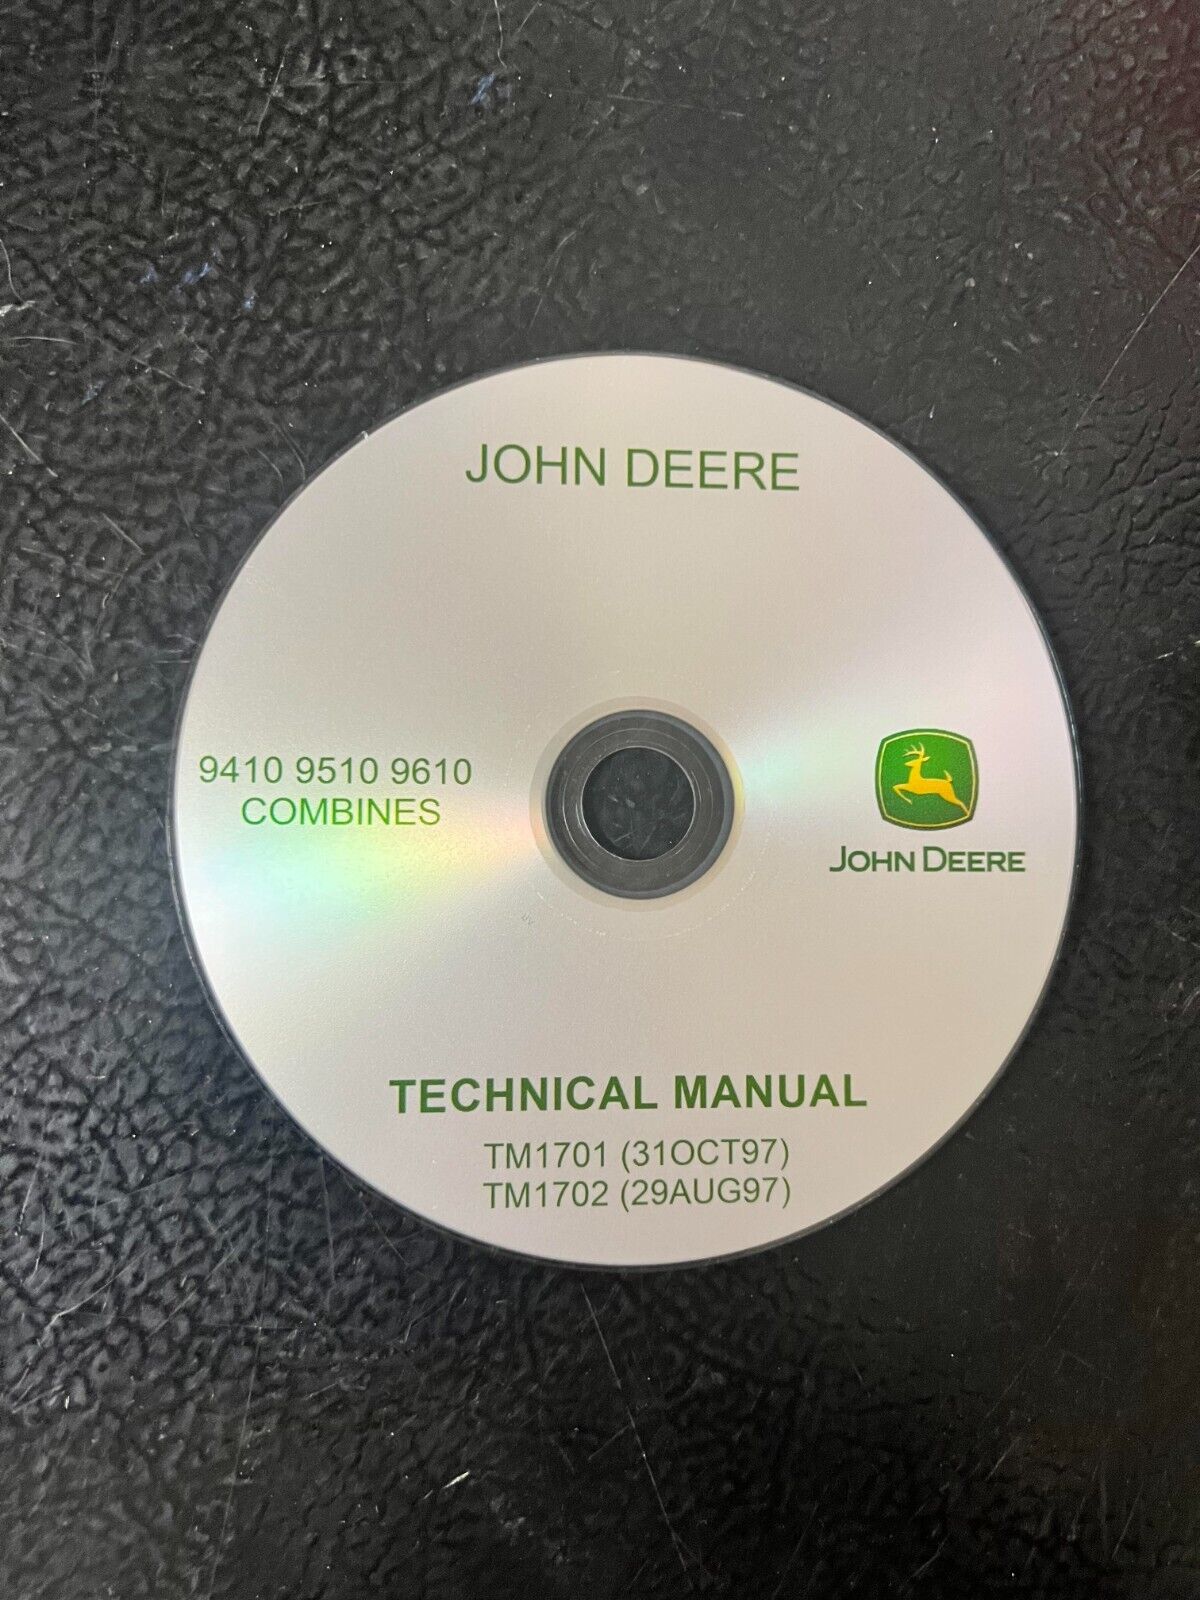 BEST JOHN DEERE 9410 9510 9610 COMBINES DIAGNOSIS AND TESTS MANUAL CD TM1702